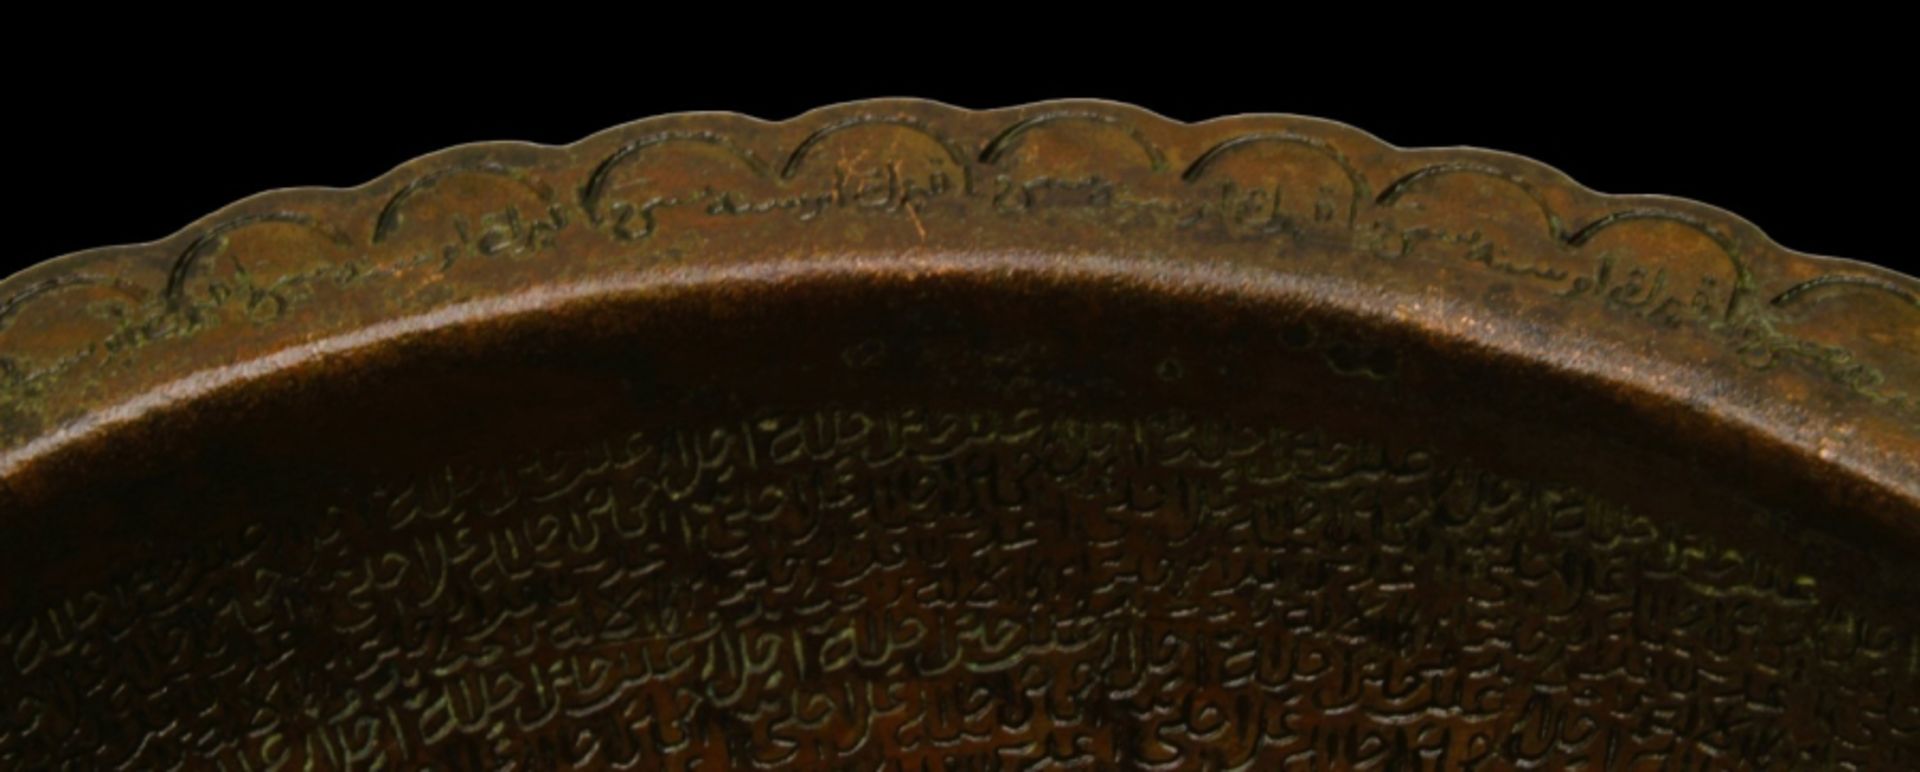 Islamic Talismanic bowl - Image 3 of 13